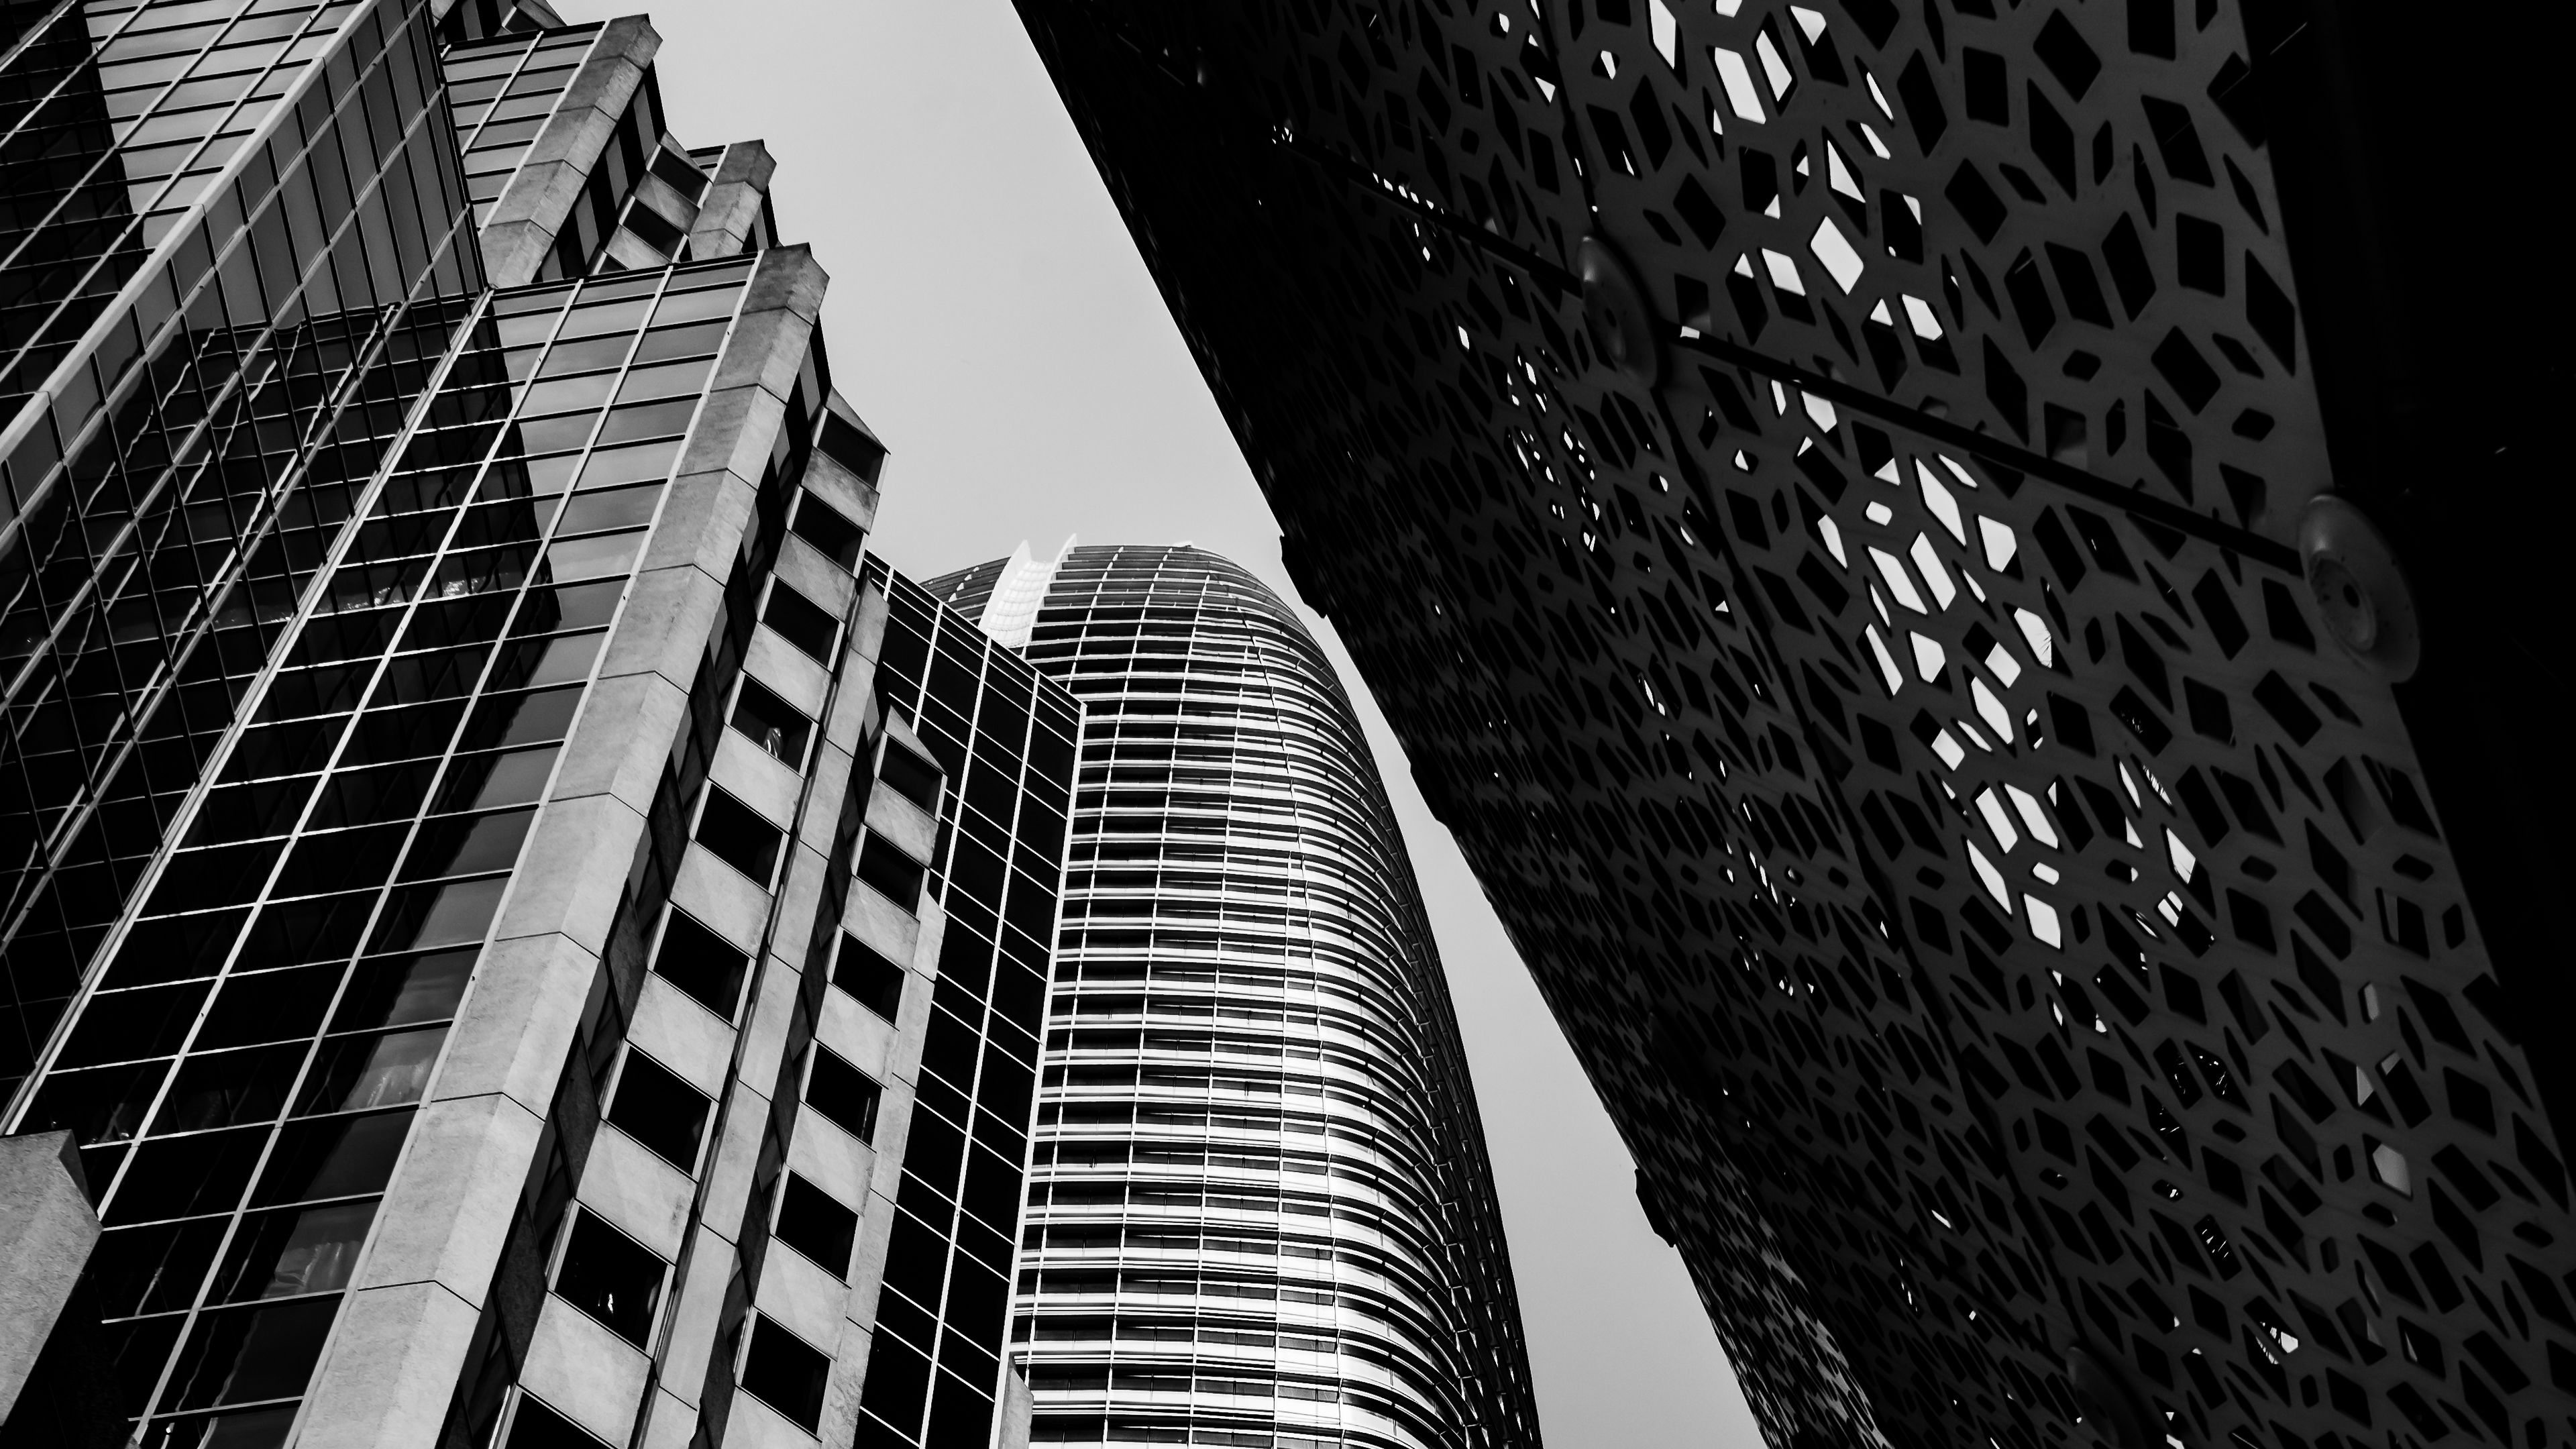 Download Wallpaper 3840x2160 Buildings Skyscrapers Bottom View Black